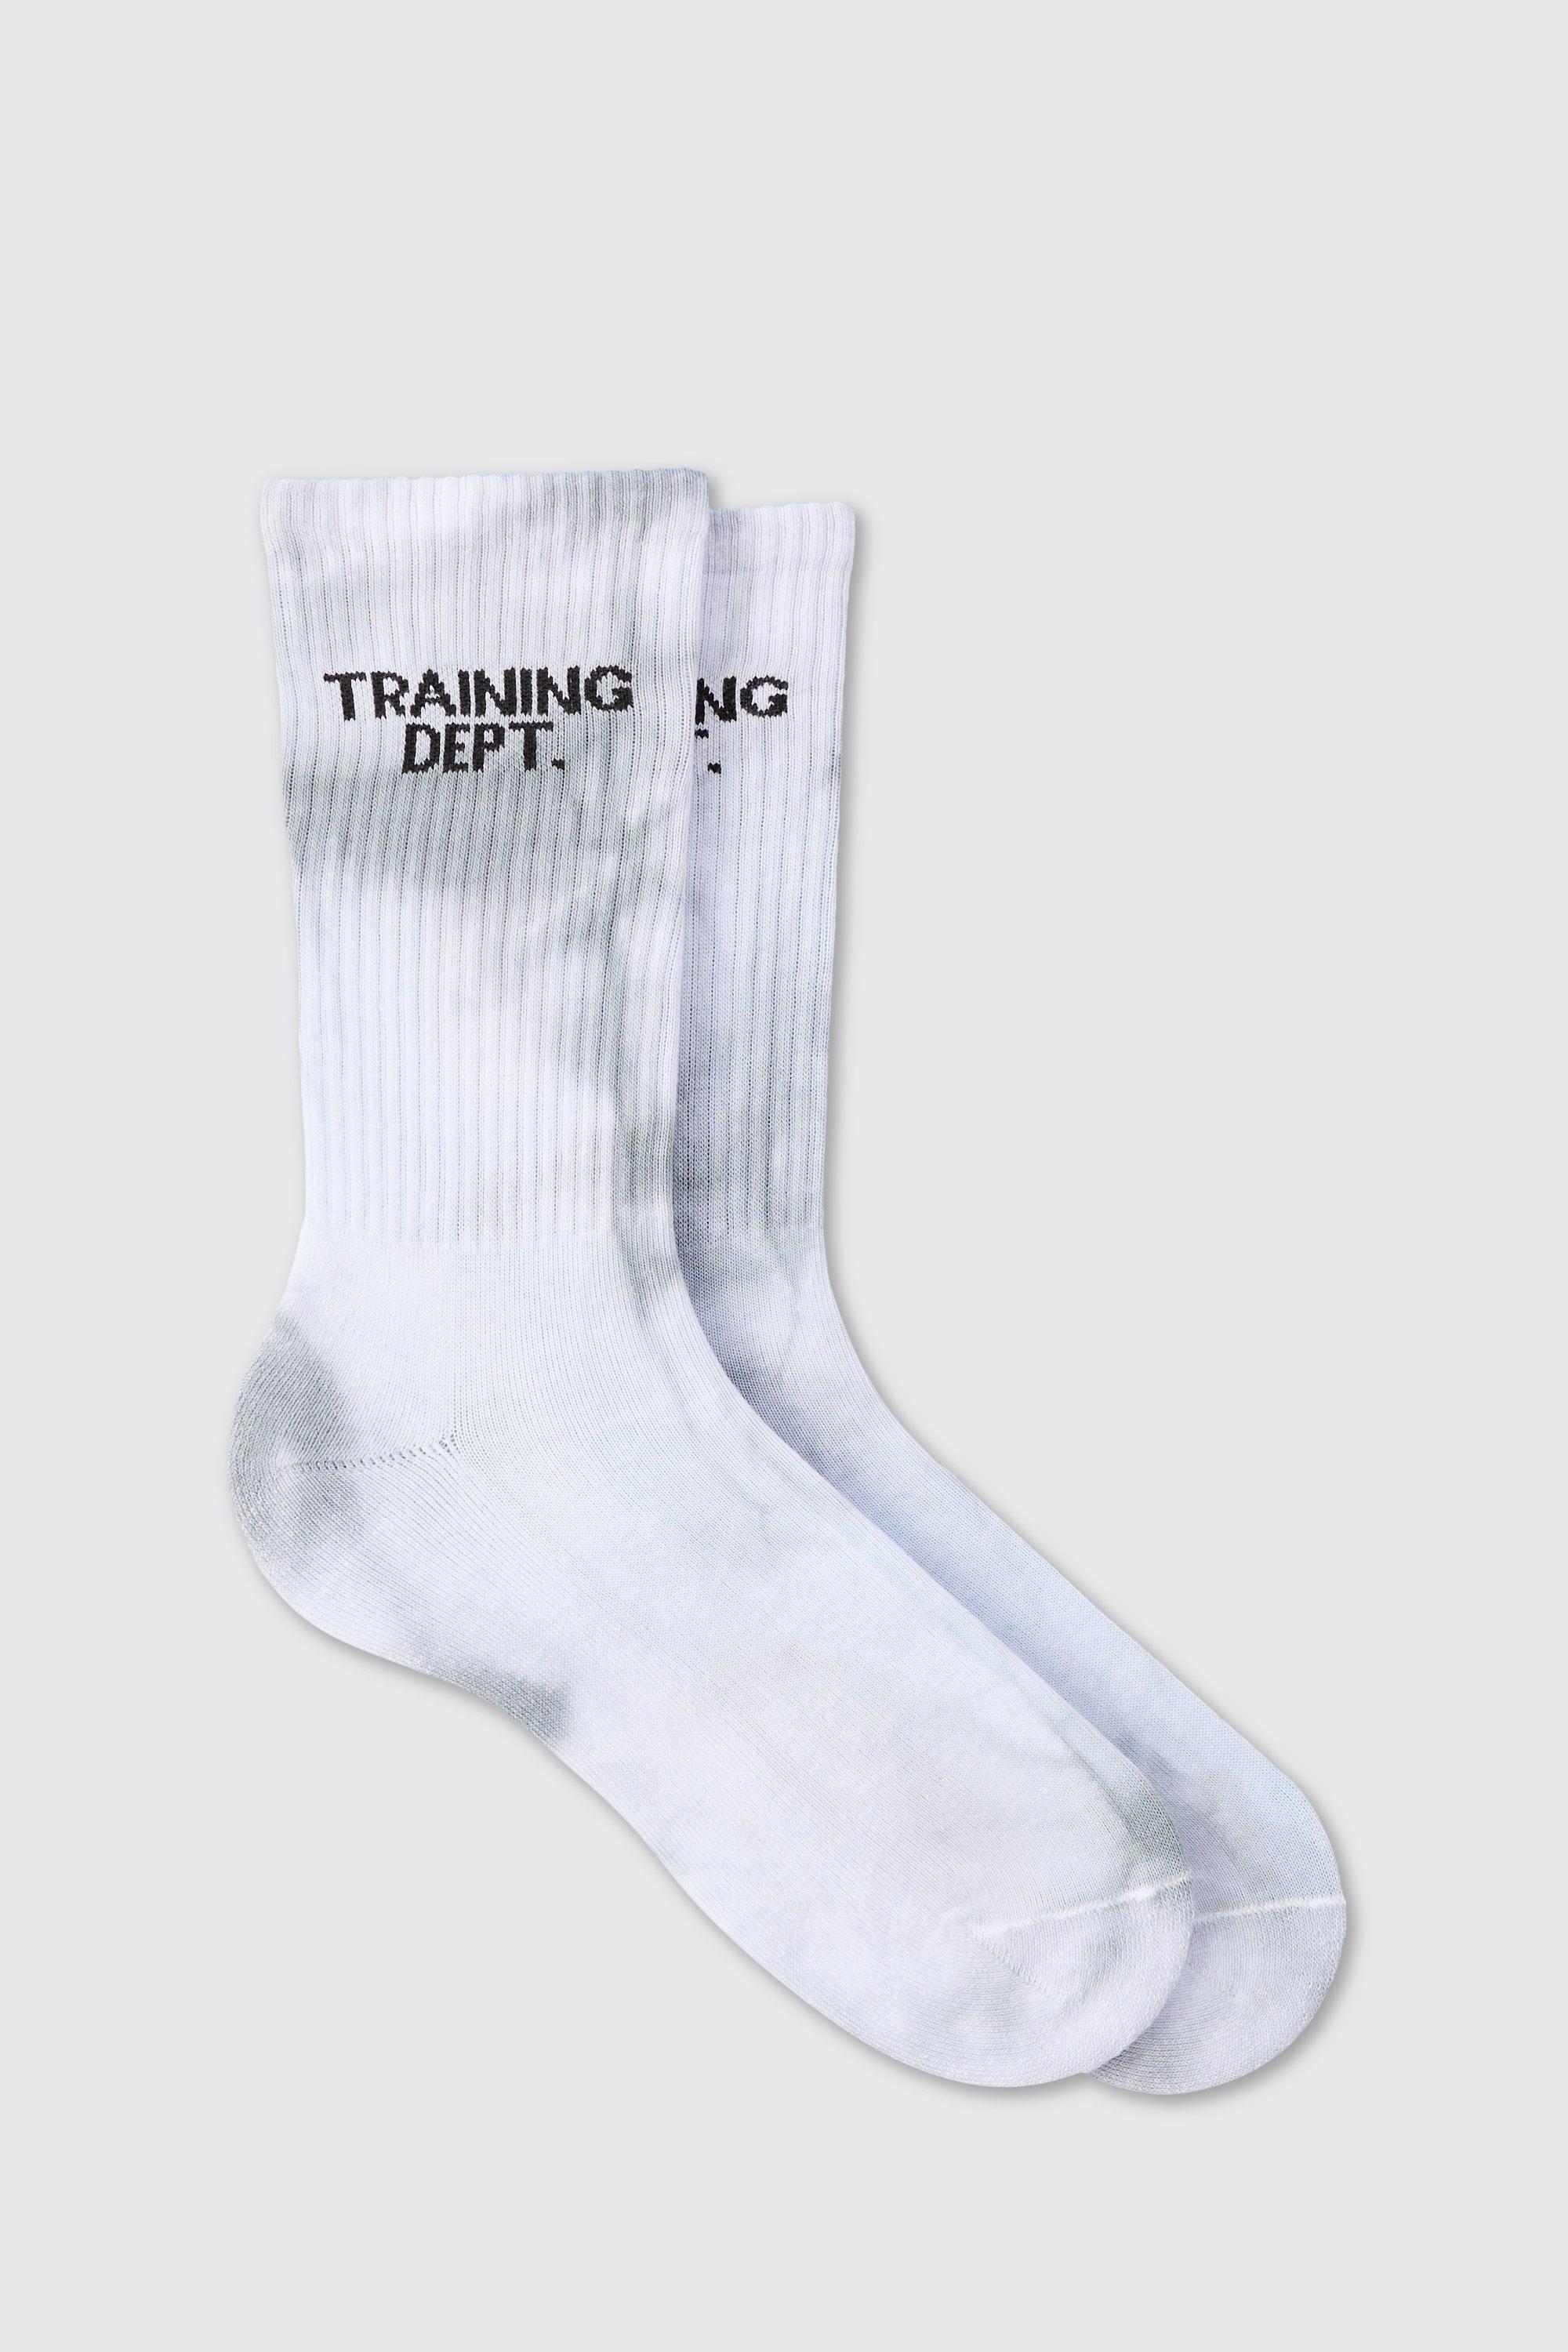 Image of Man Active Training Dept Tie-dye Crew Socks, Grigio